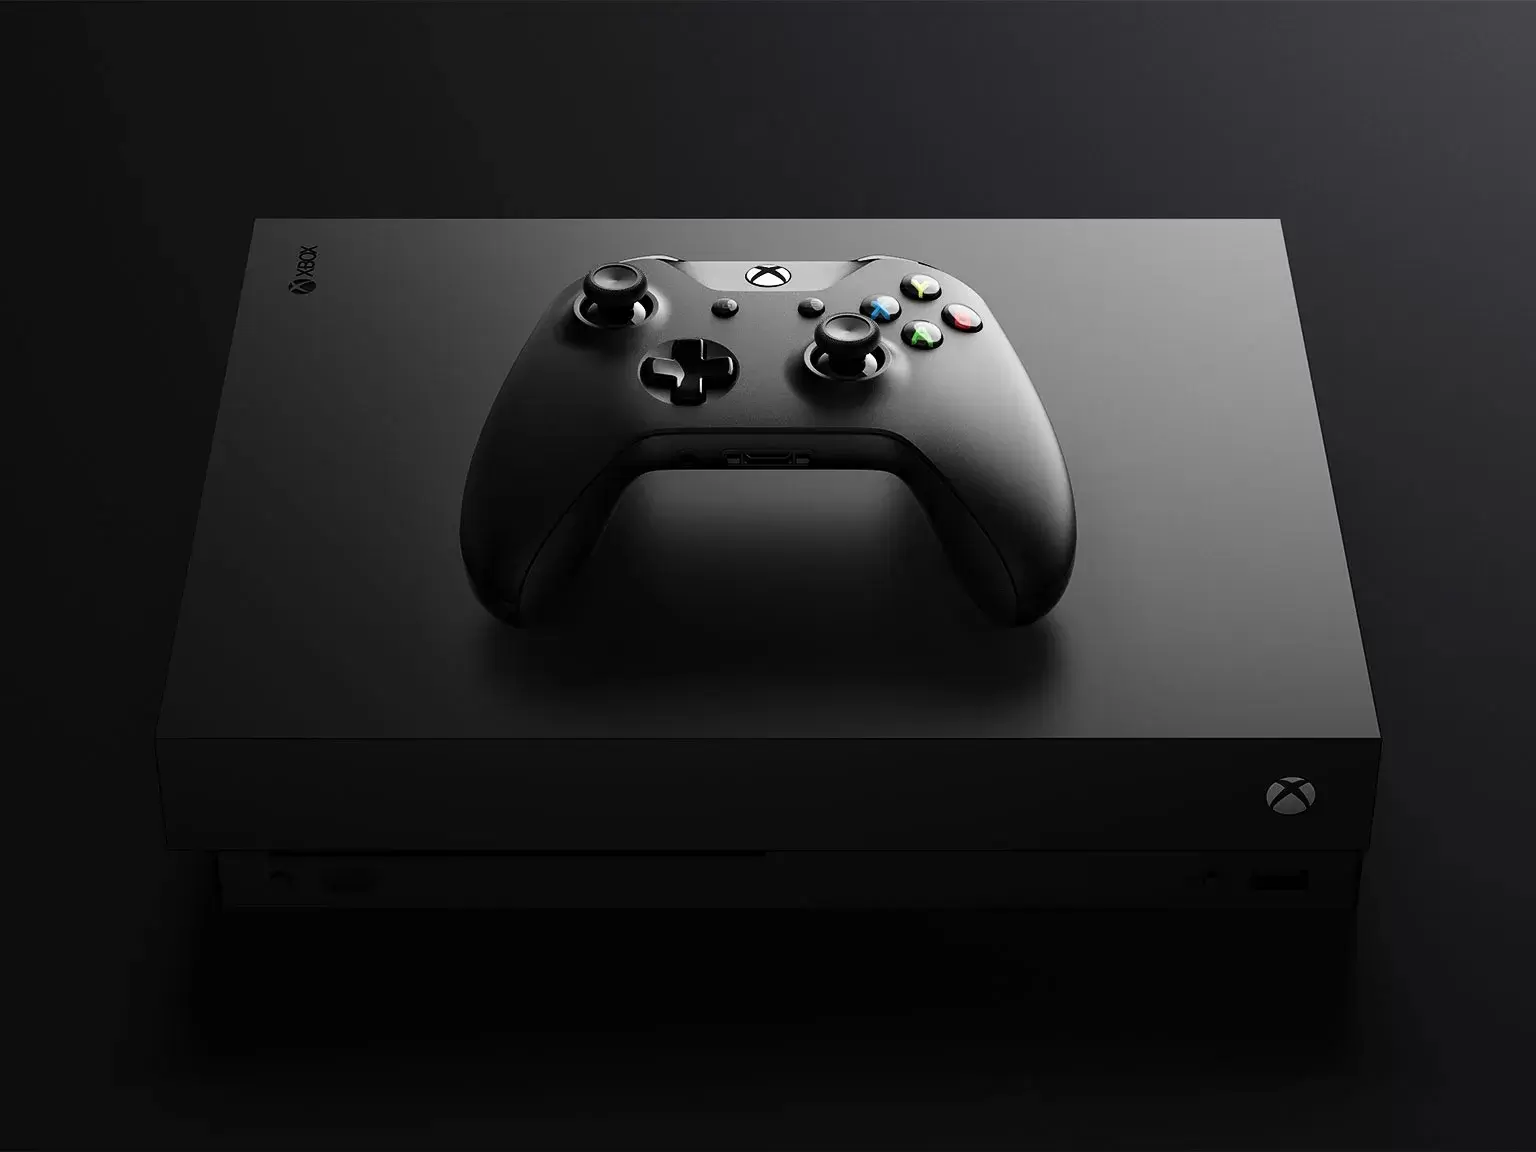 Microsoft официально признала убытки от продаж консолей Xbox